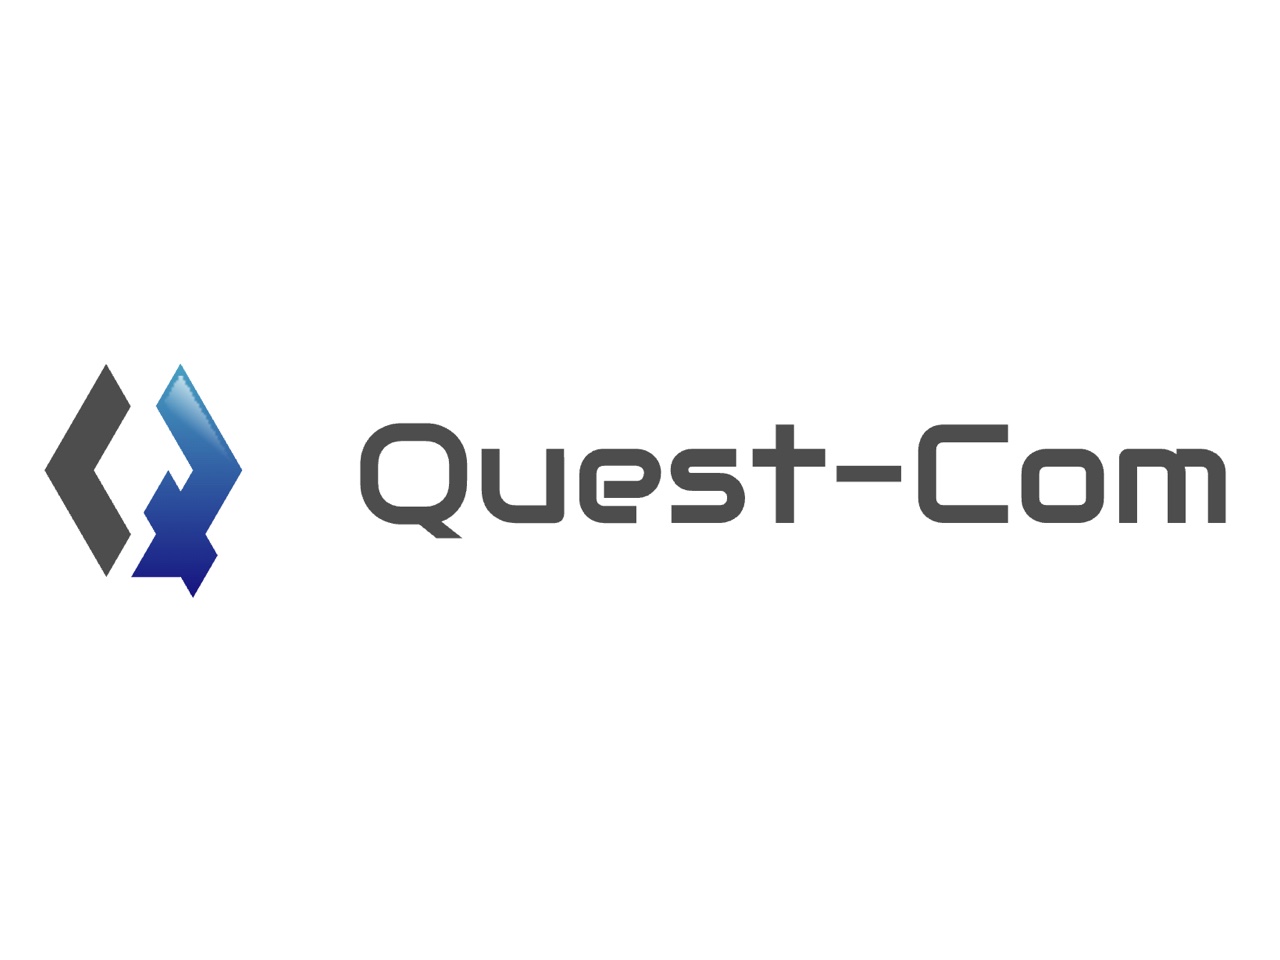 Quest-Com 株式会社のイメージ画像2